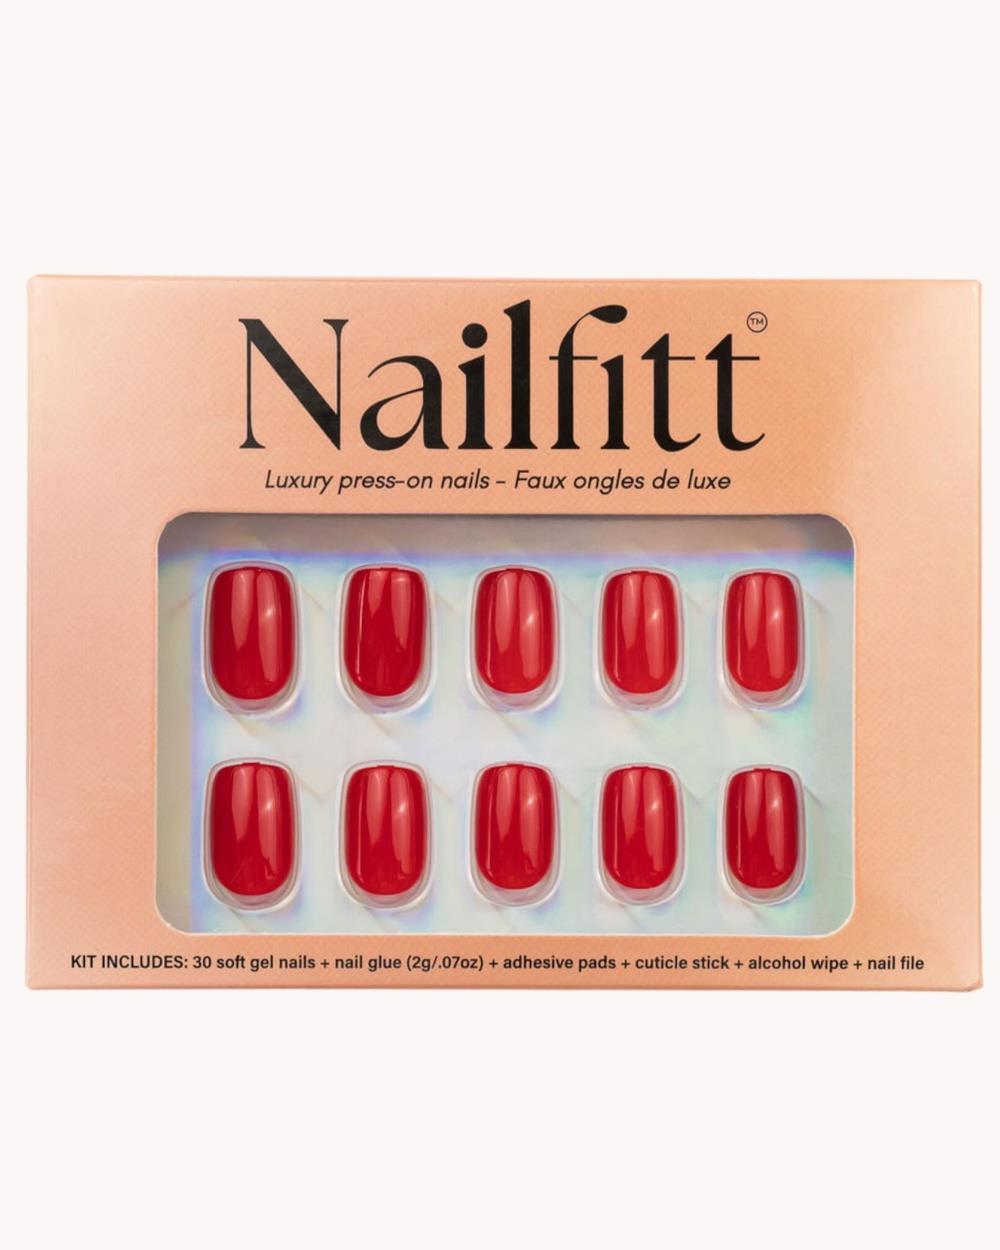 Nailfitt - Glam Press On Nails Scarlet - Beauty (Gold) Glam Press-On Nails - Scarlet